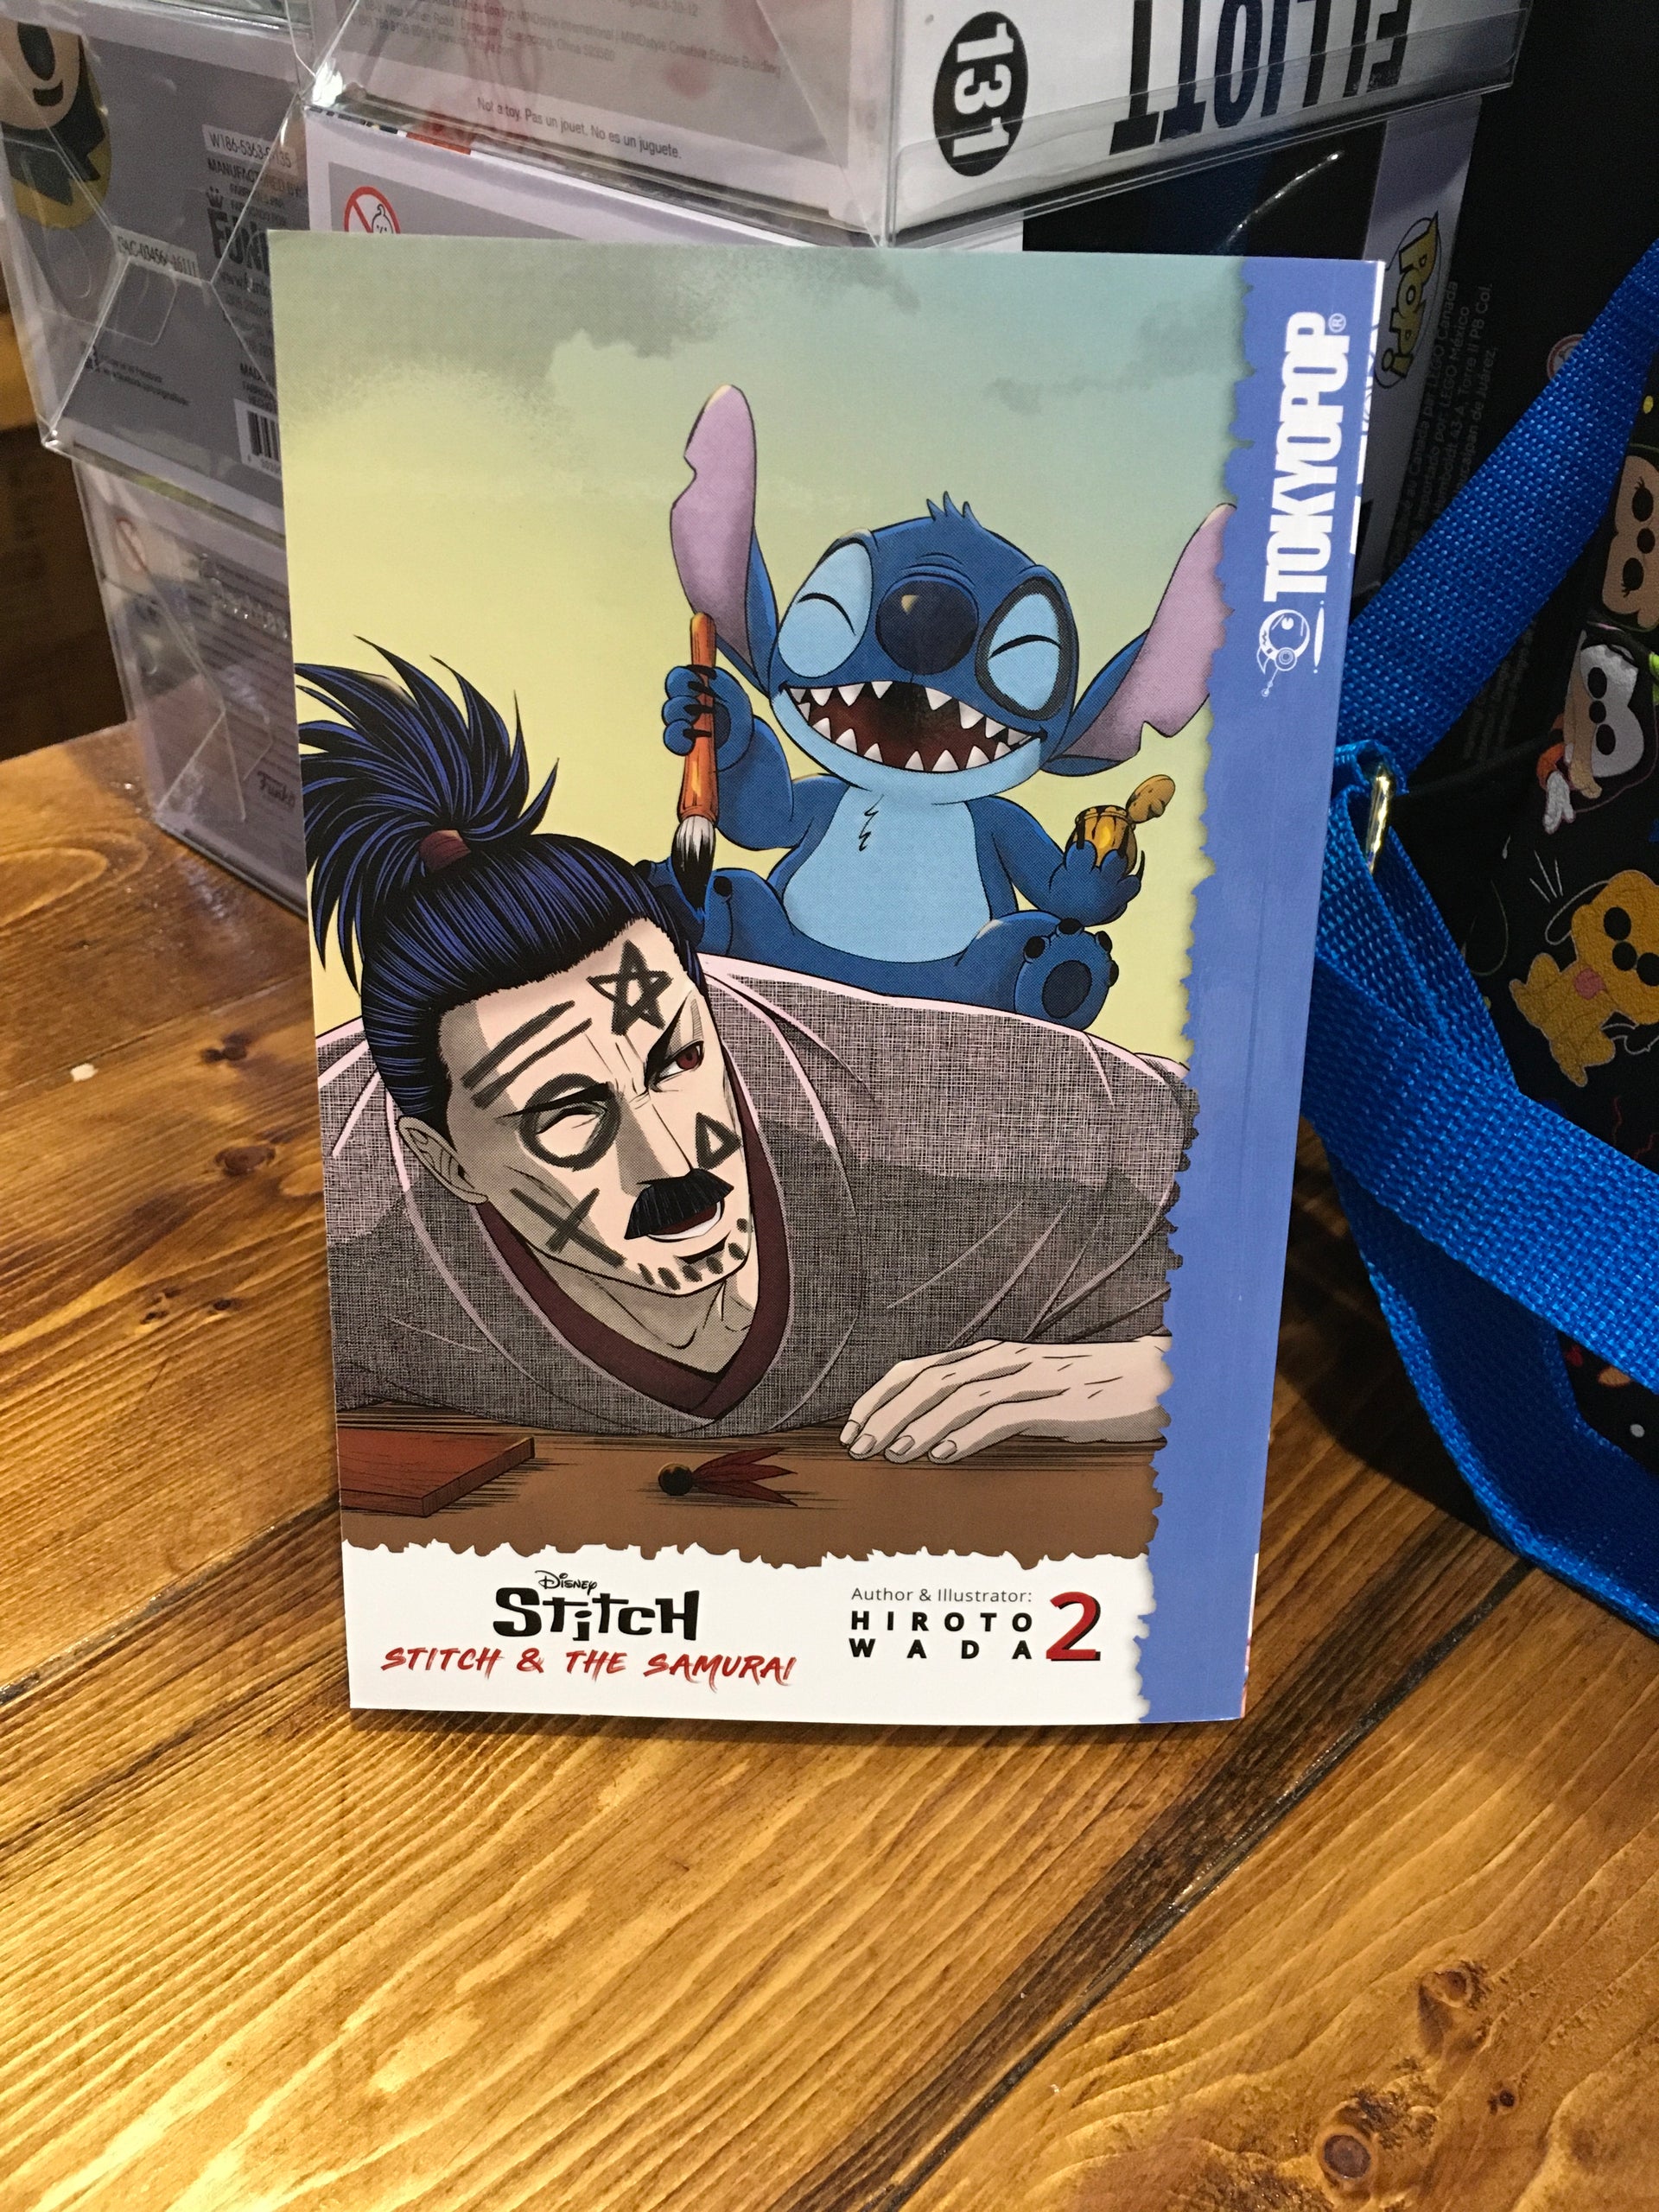 Manga: Disney's Stitch & The Samurai Vol. 01 By Hiroto Wada New Tokyopop